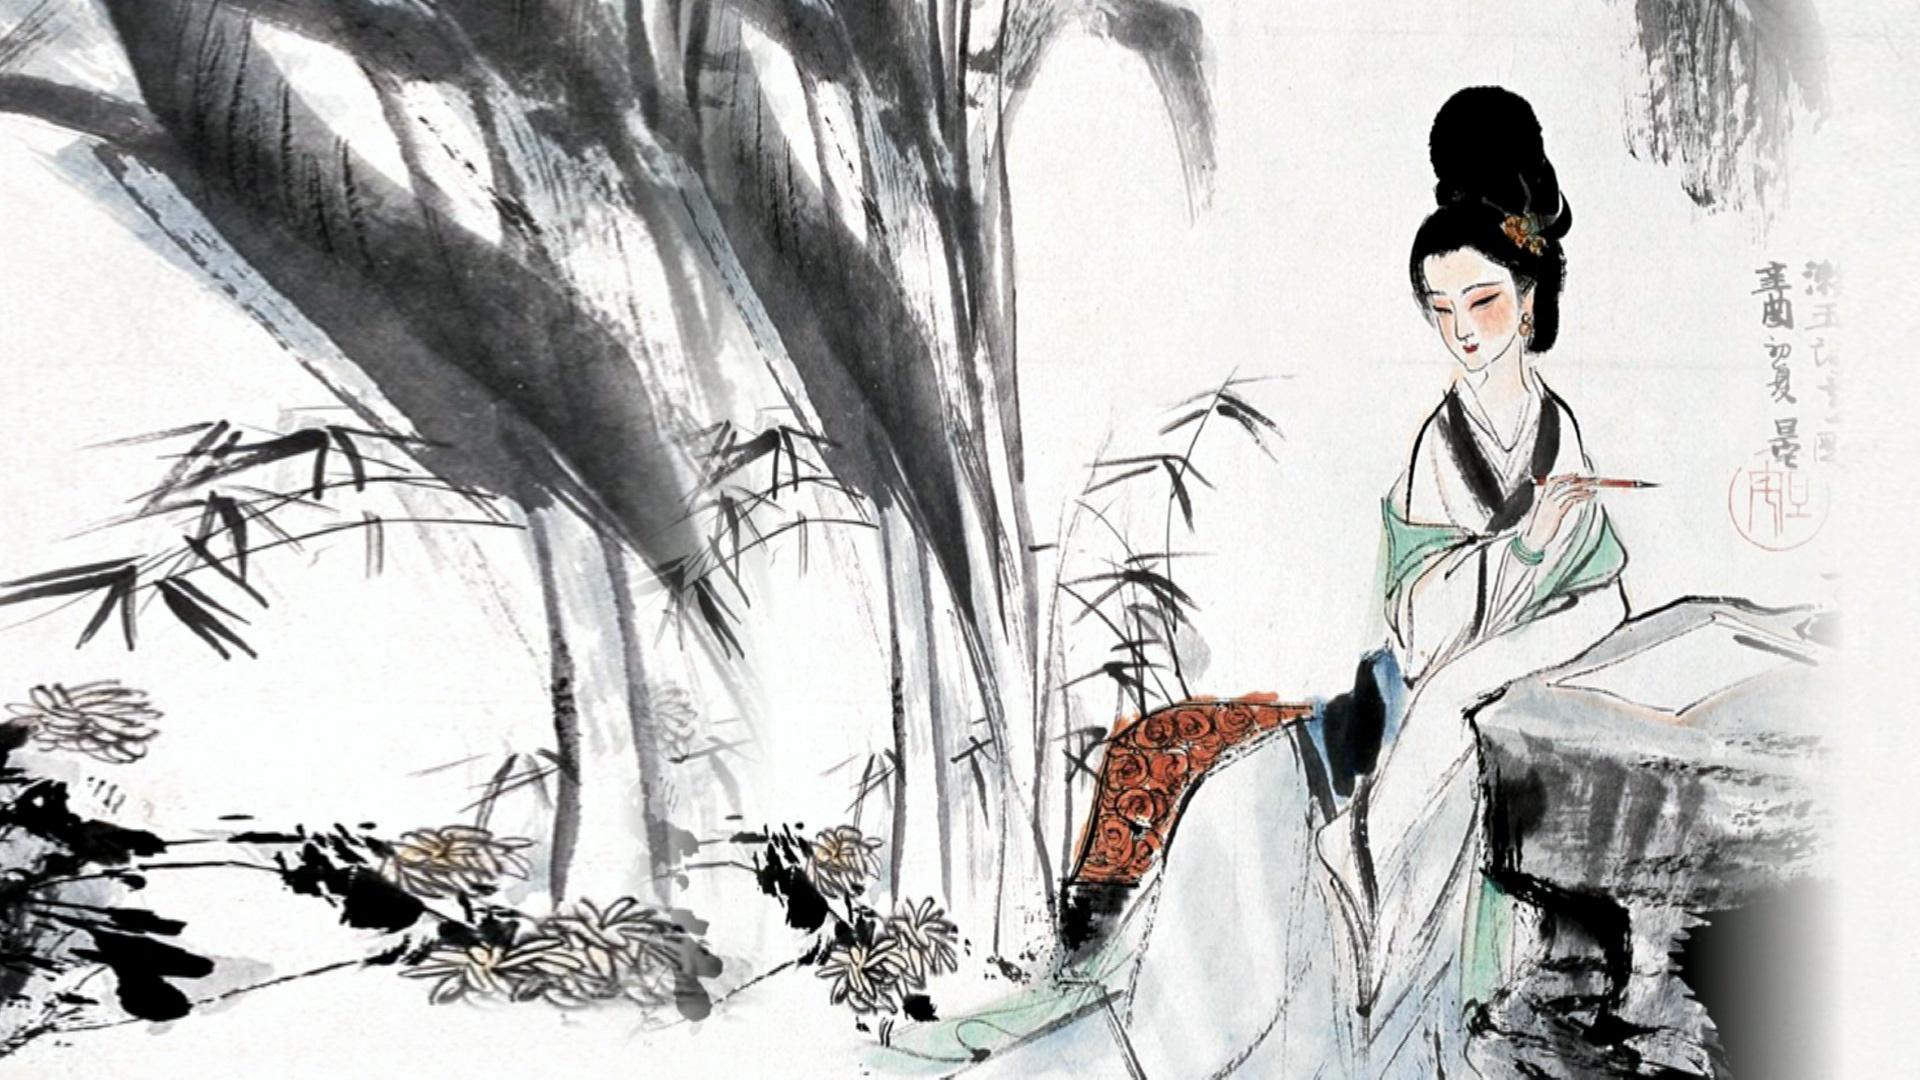 role of women in confucianism